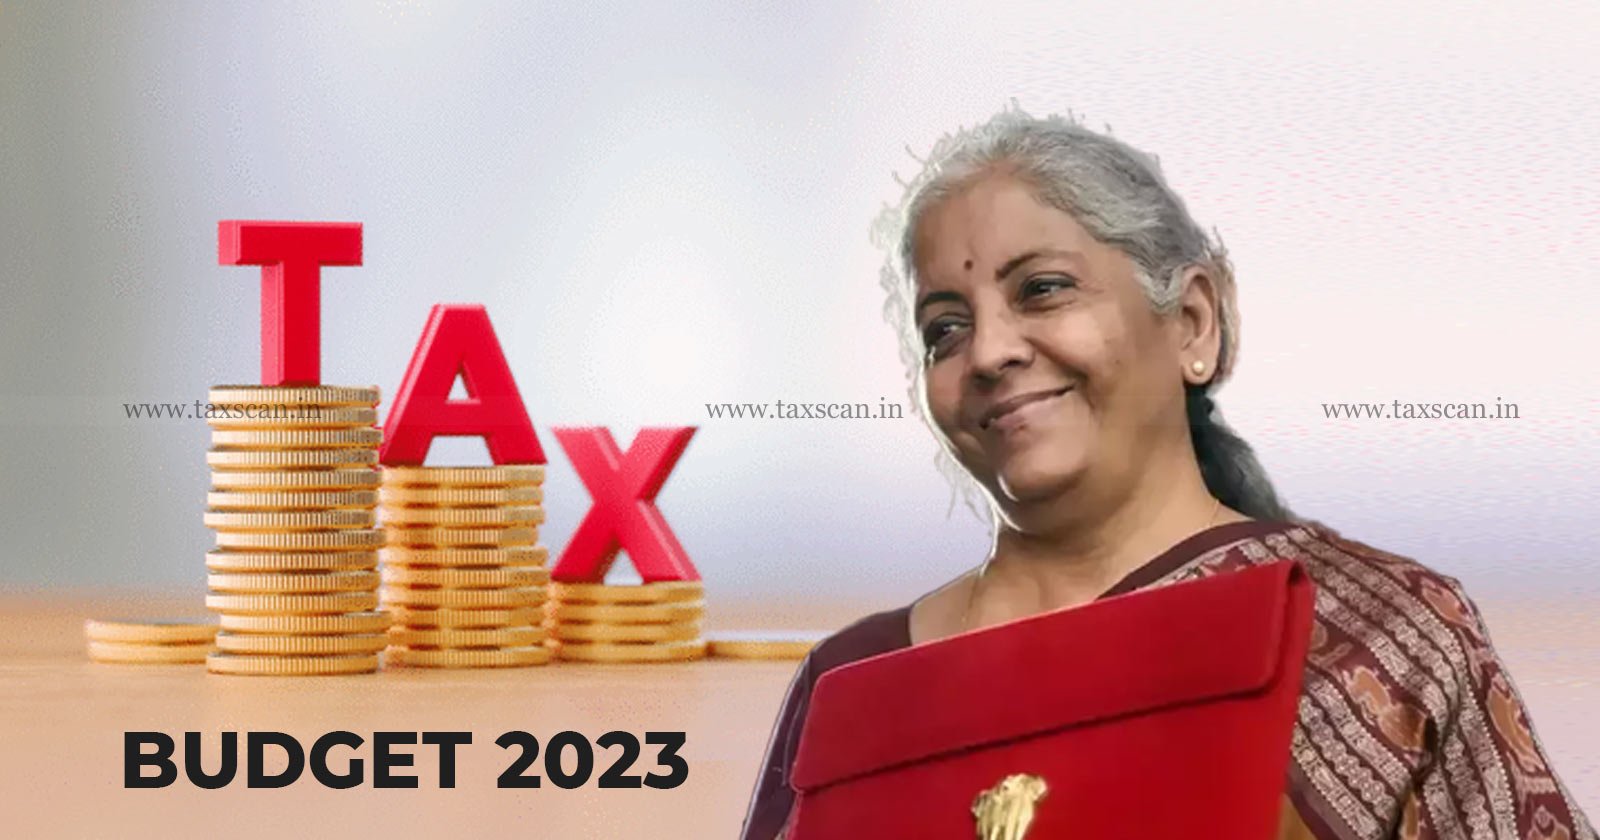 Budget 2023 - Taxpayers - budget 2023 - budget 2023 live - union budget 2023 - nirmala sitharaman budget - nirmala sitharaman union budget -nirmala sitharaman -budget 2023 -taxscan